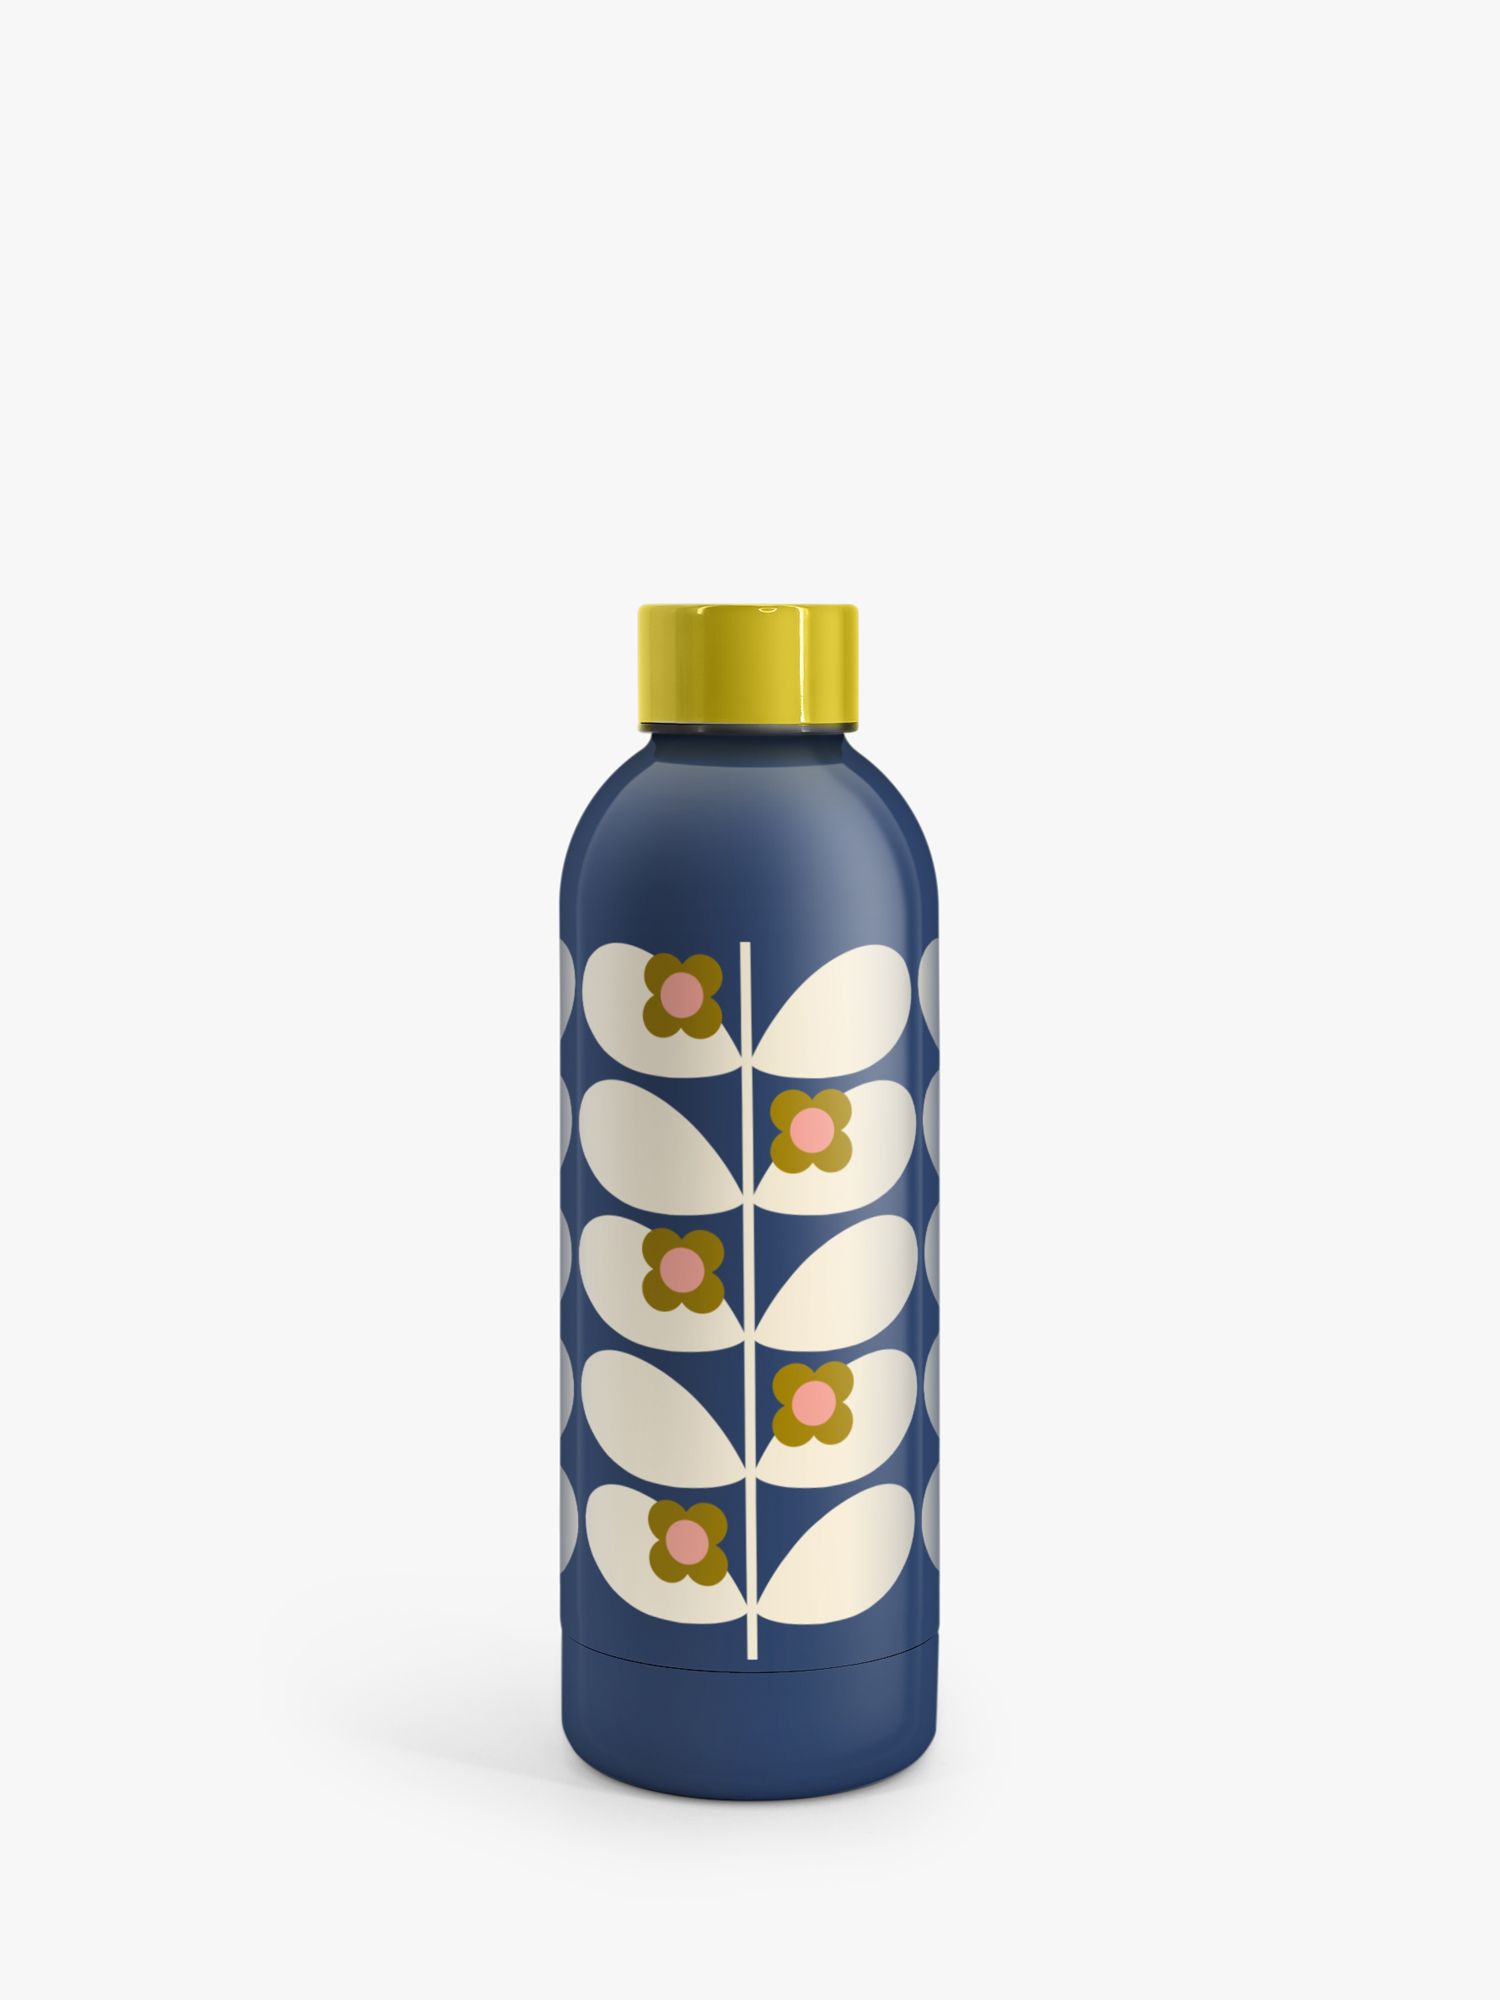 Orla Kiely Wild Rose Insulated Stainless Steel Drinks Bottle, 500ml, Blue/Yellow